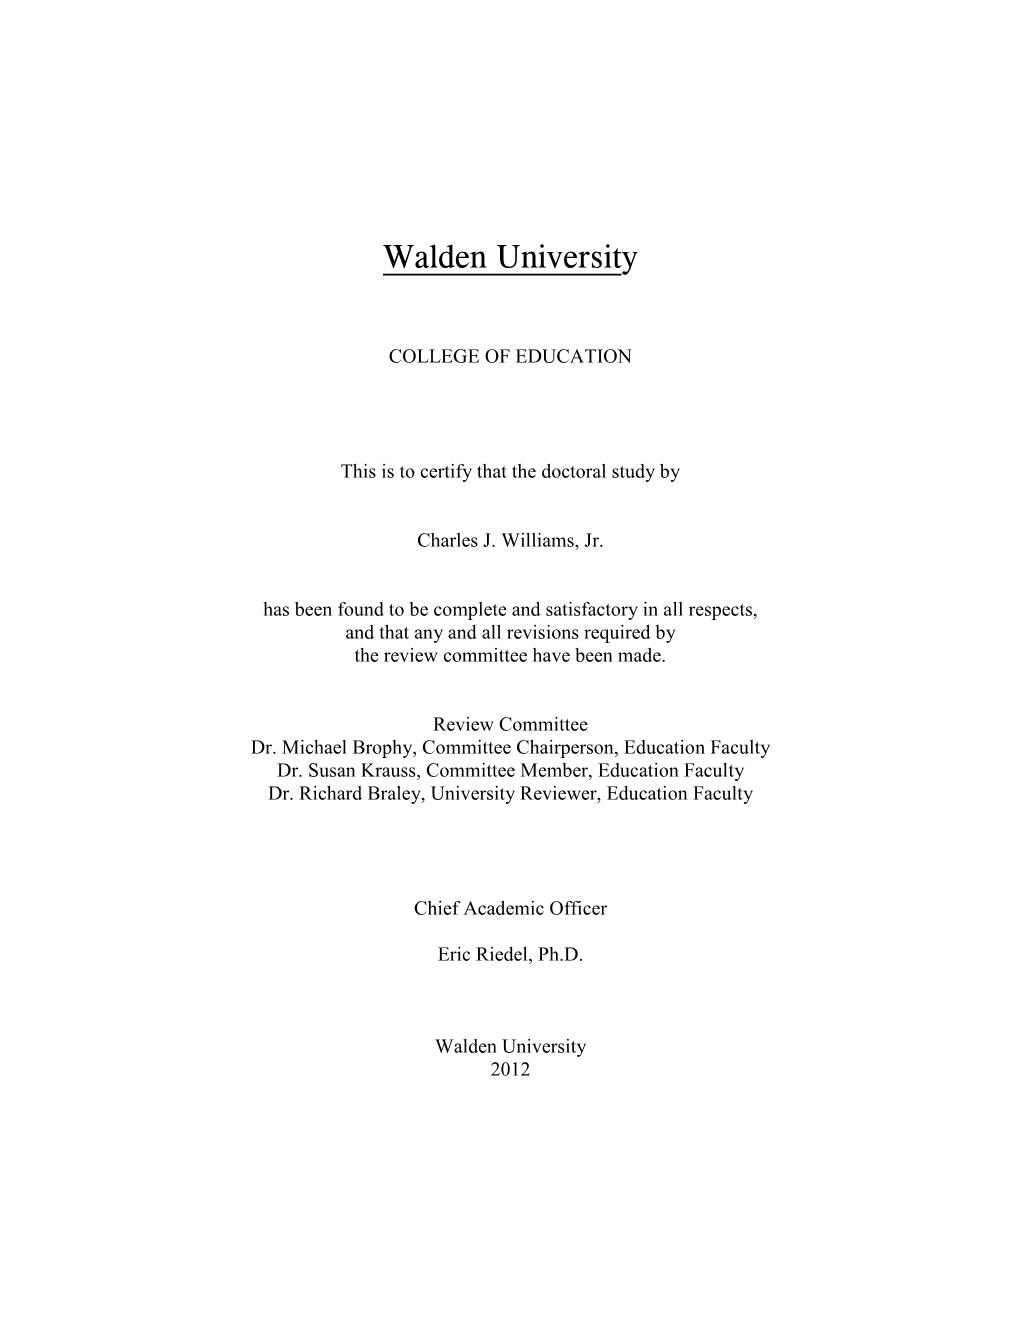 Walden University 2012